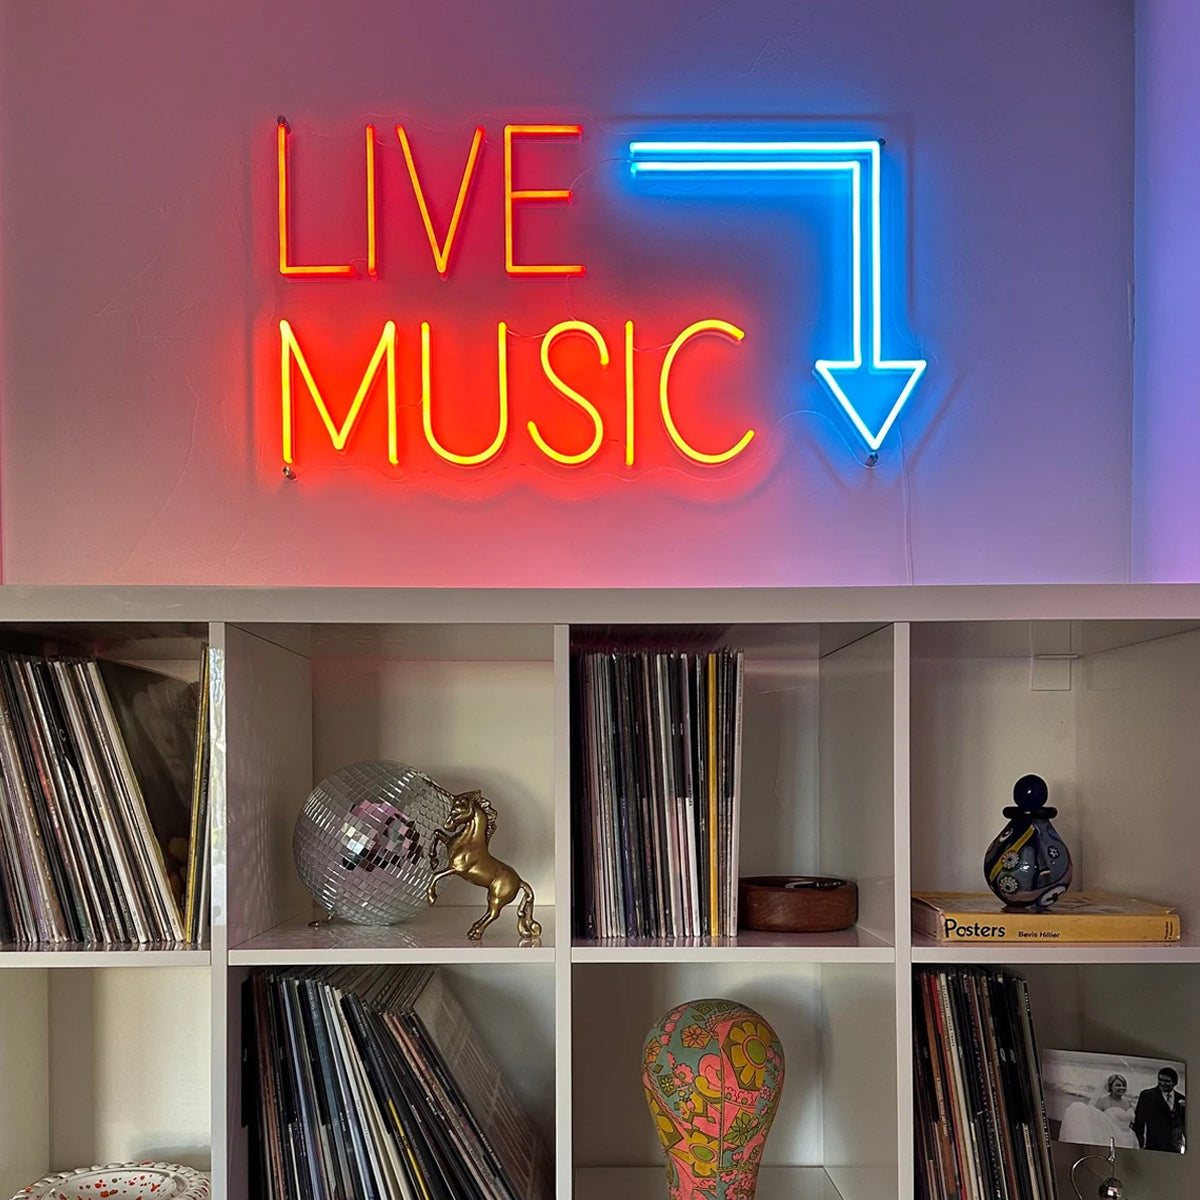 NEONIP-100% Handmade LIVE MUSIC Neon Sign,Music Studio Decor,Retro Home Decor